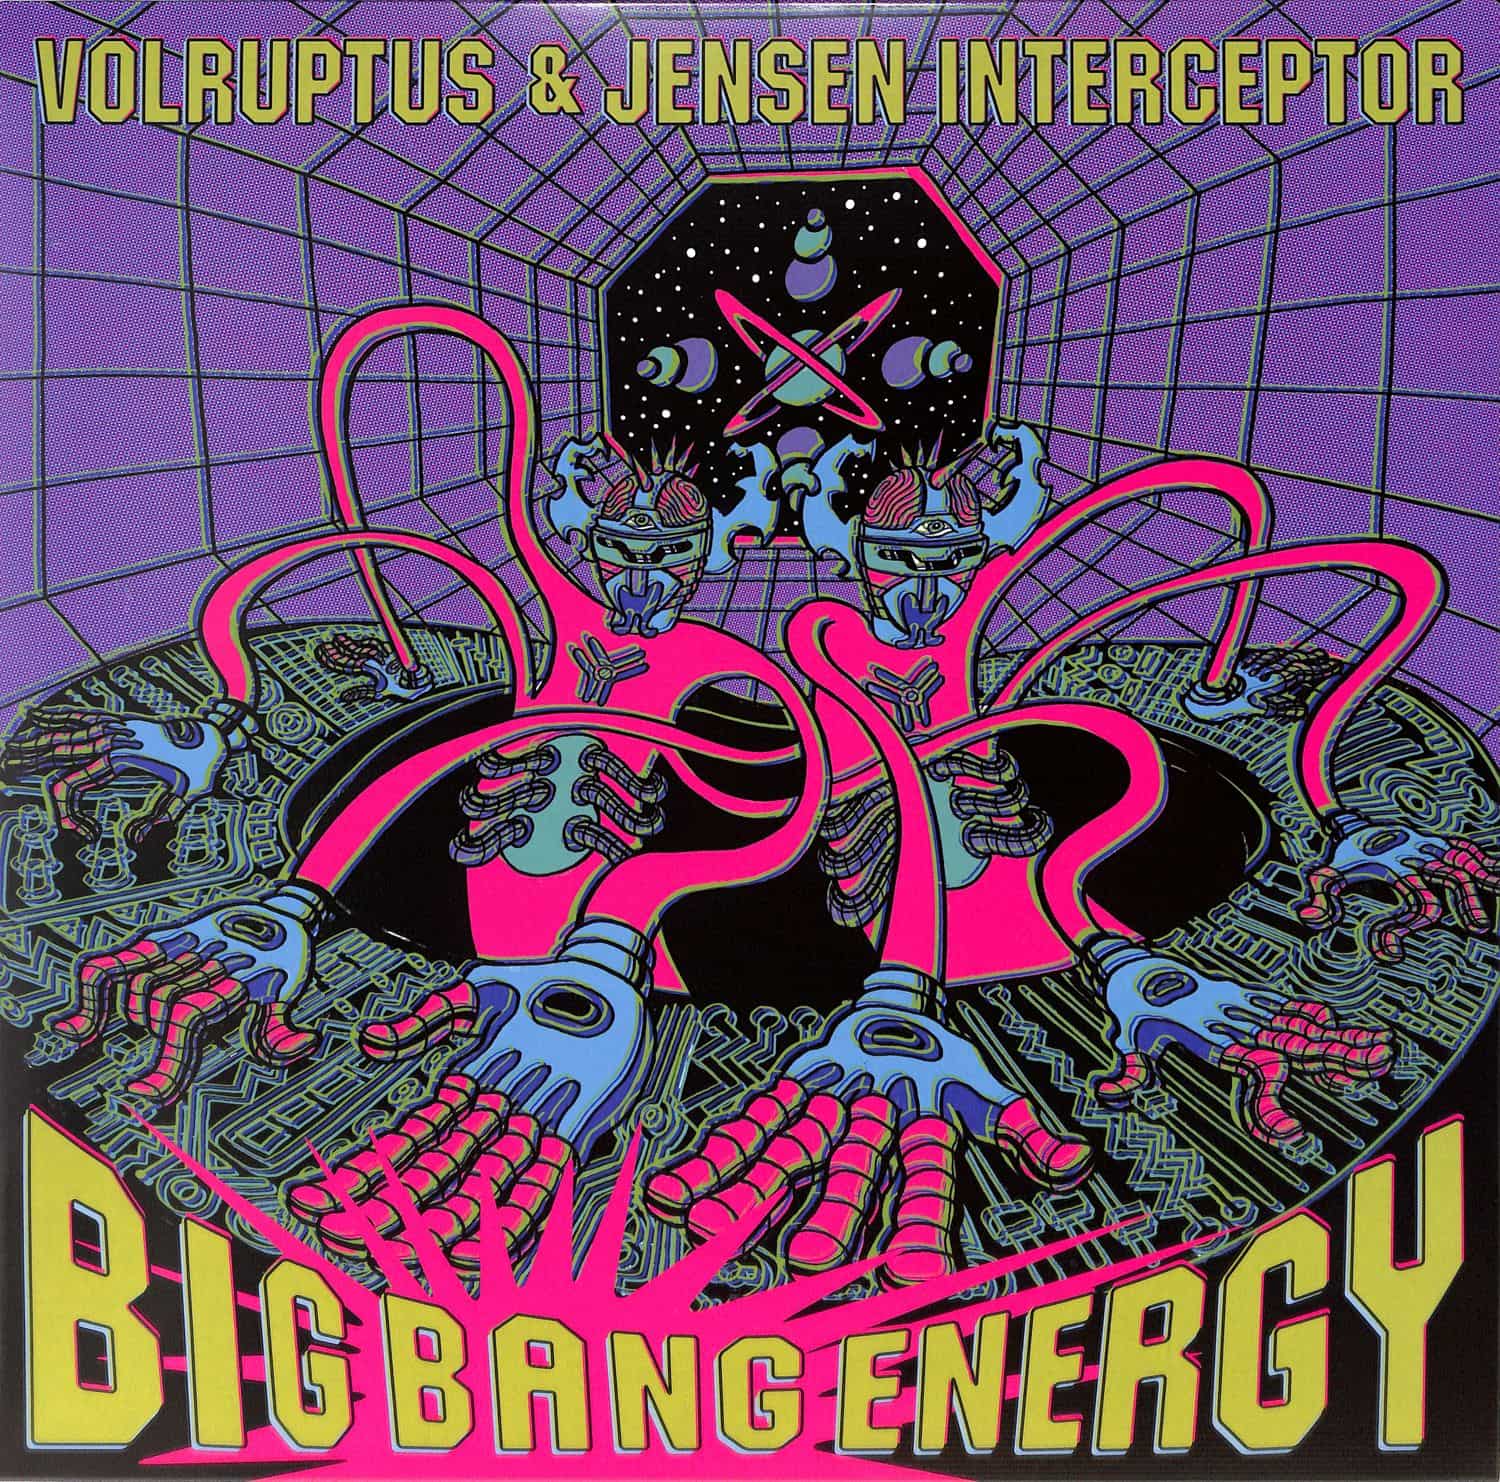 Volruptus & Jensen Interceptor - BIG BANG ENERGY